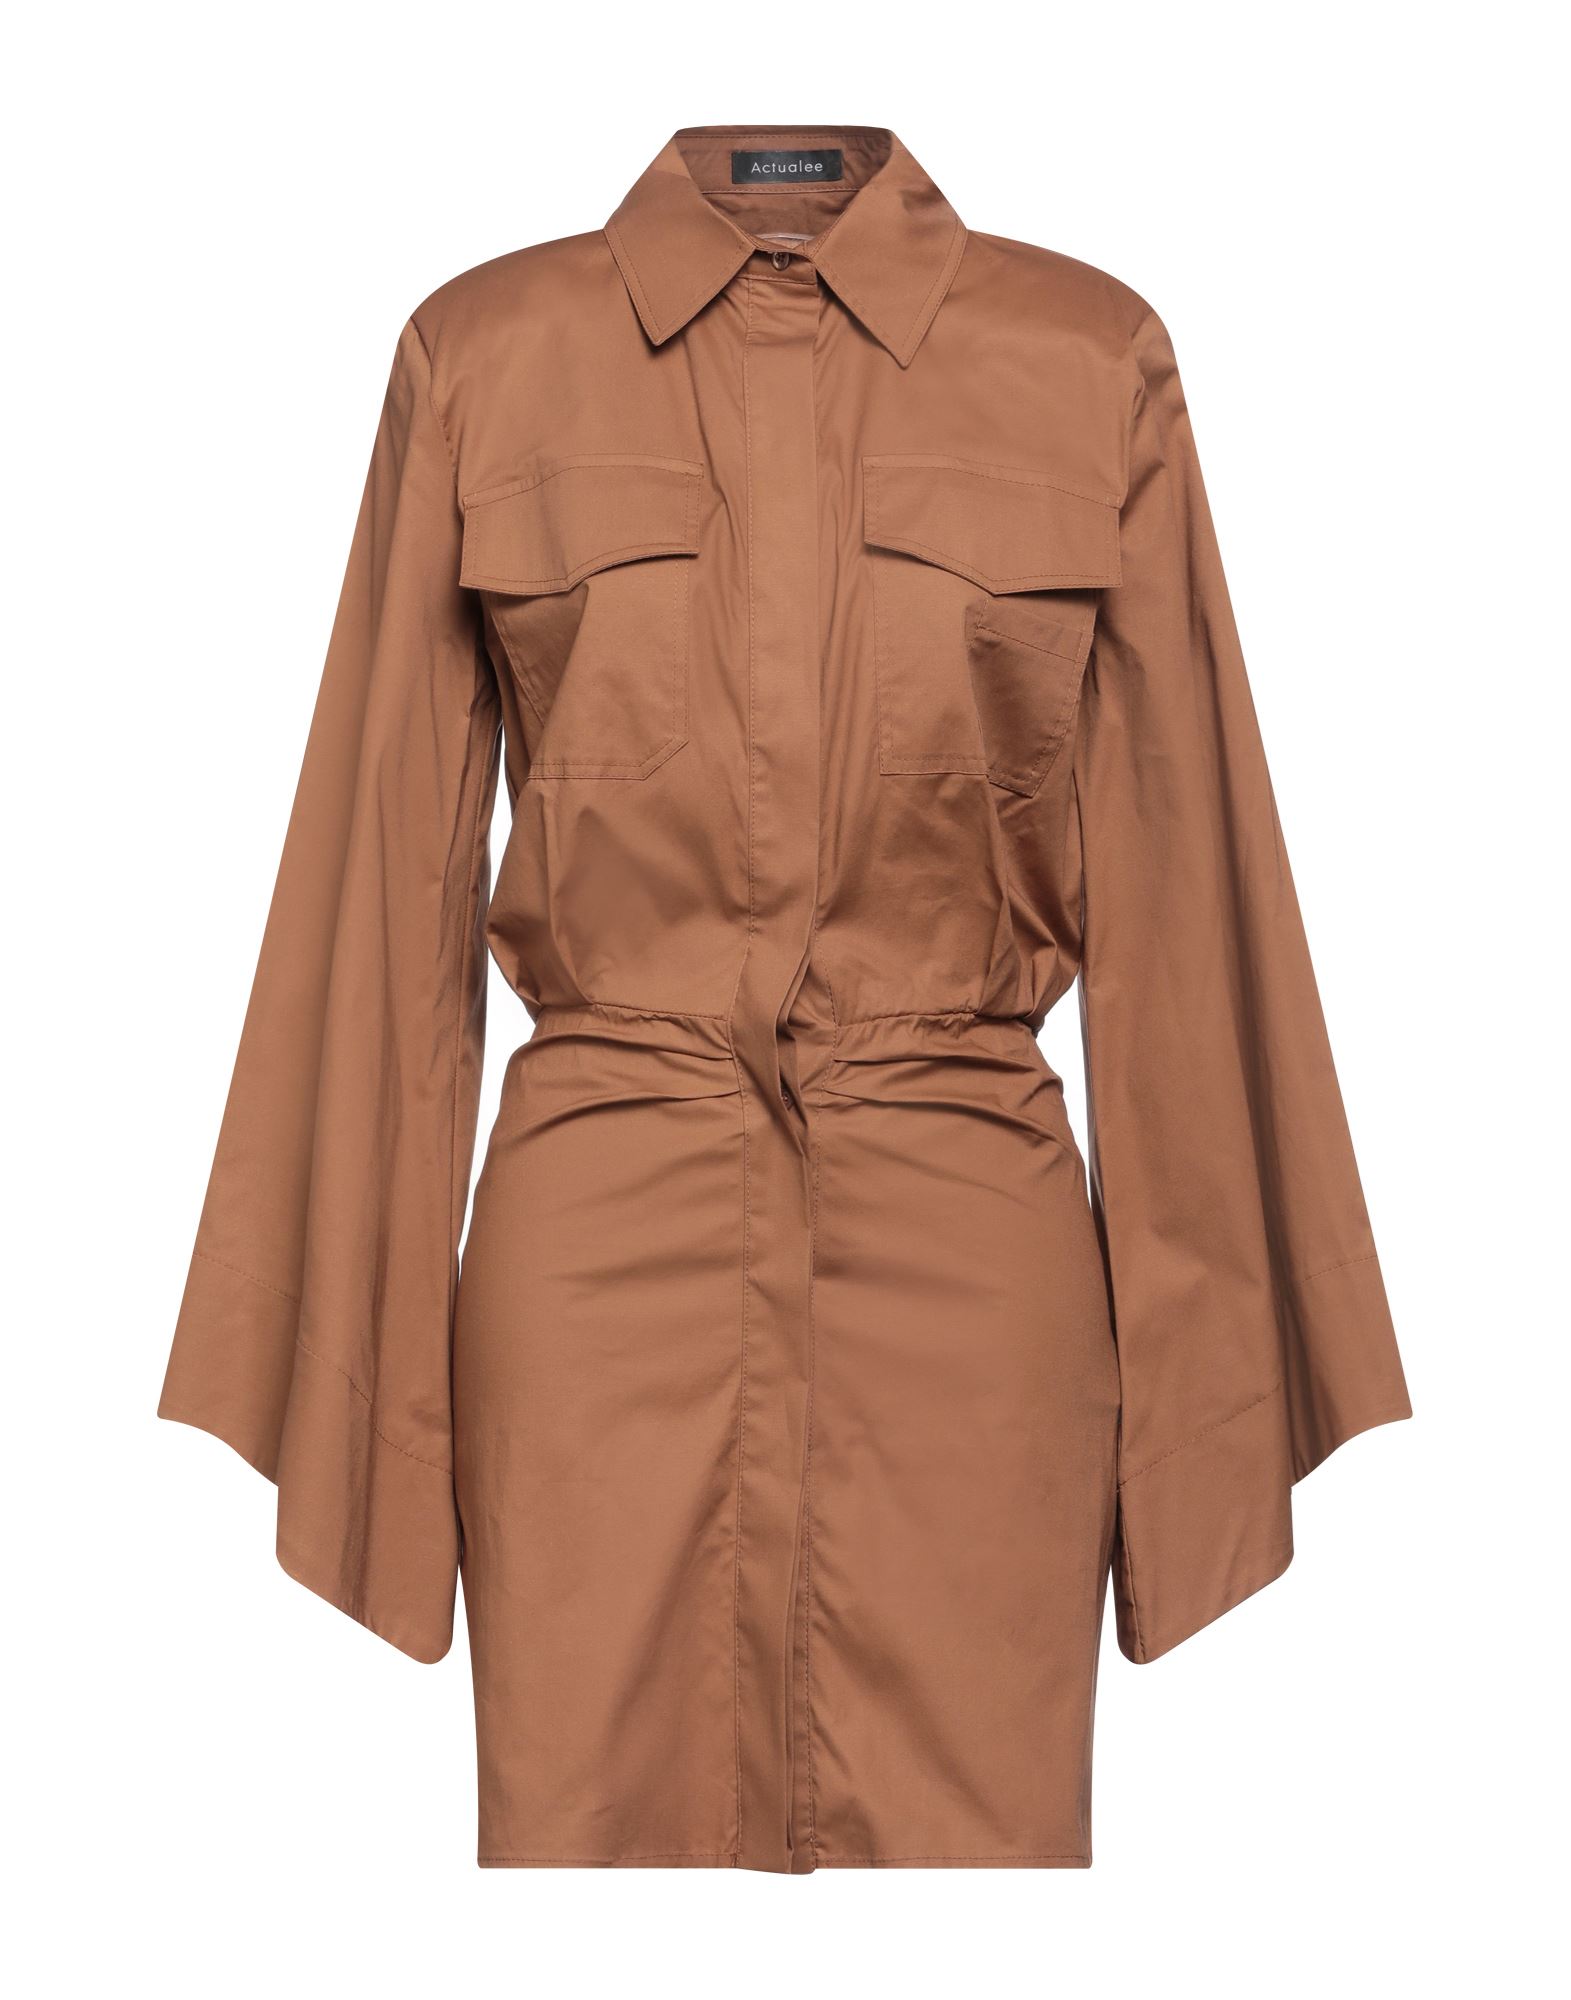 Actualee Short Dresses In Brown